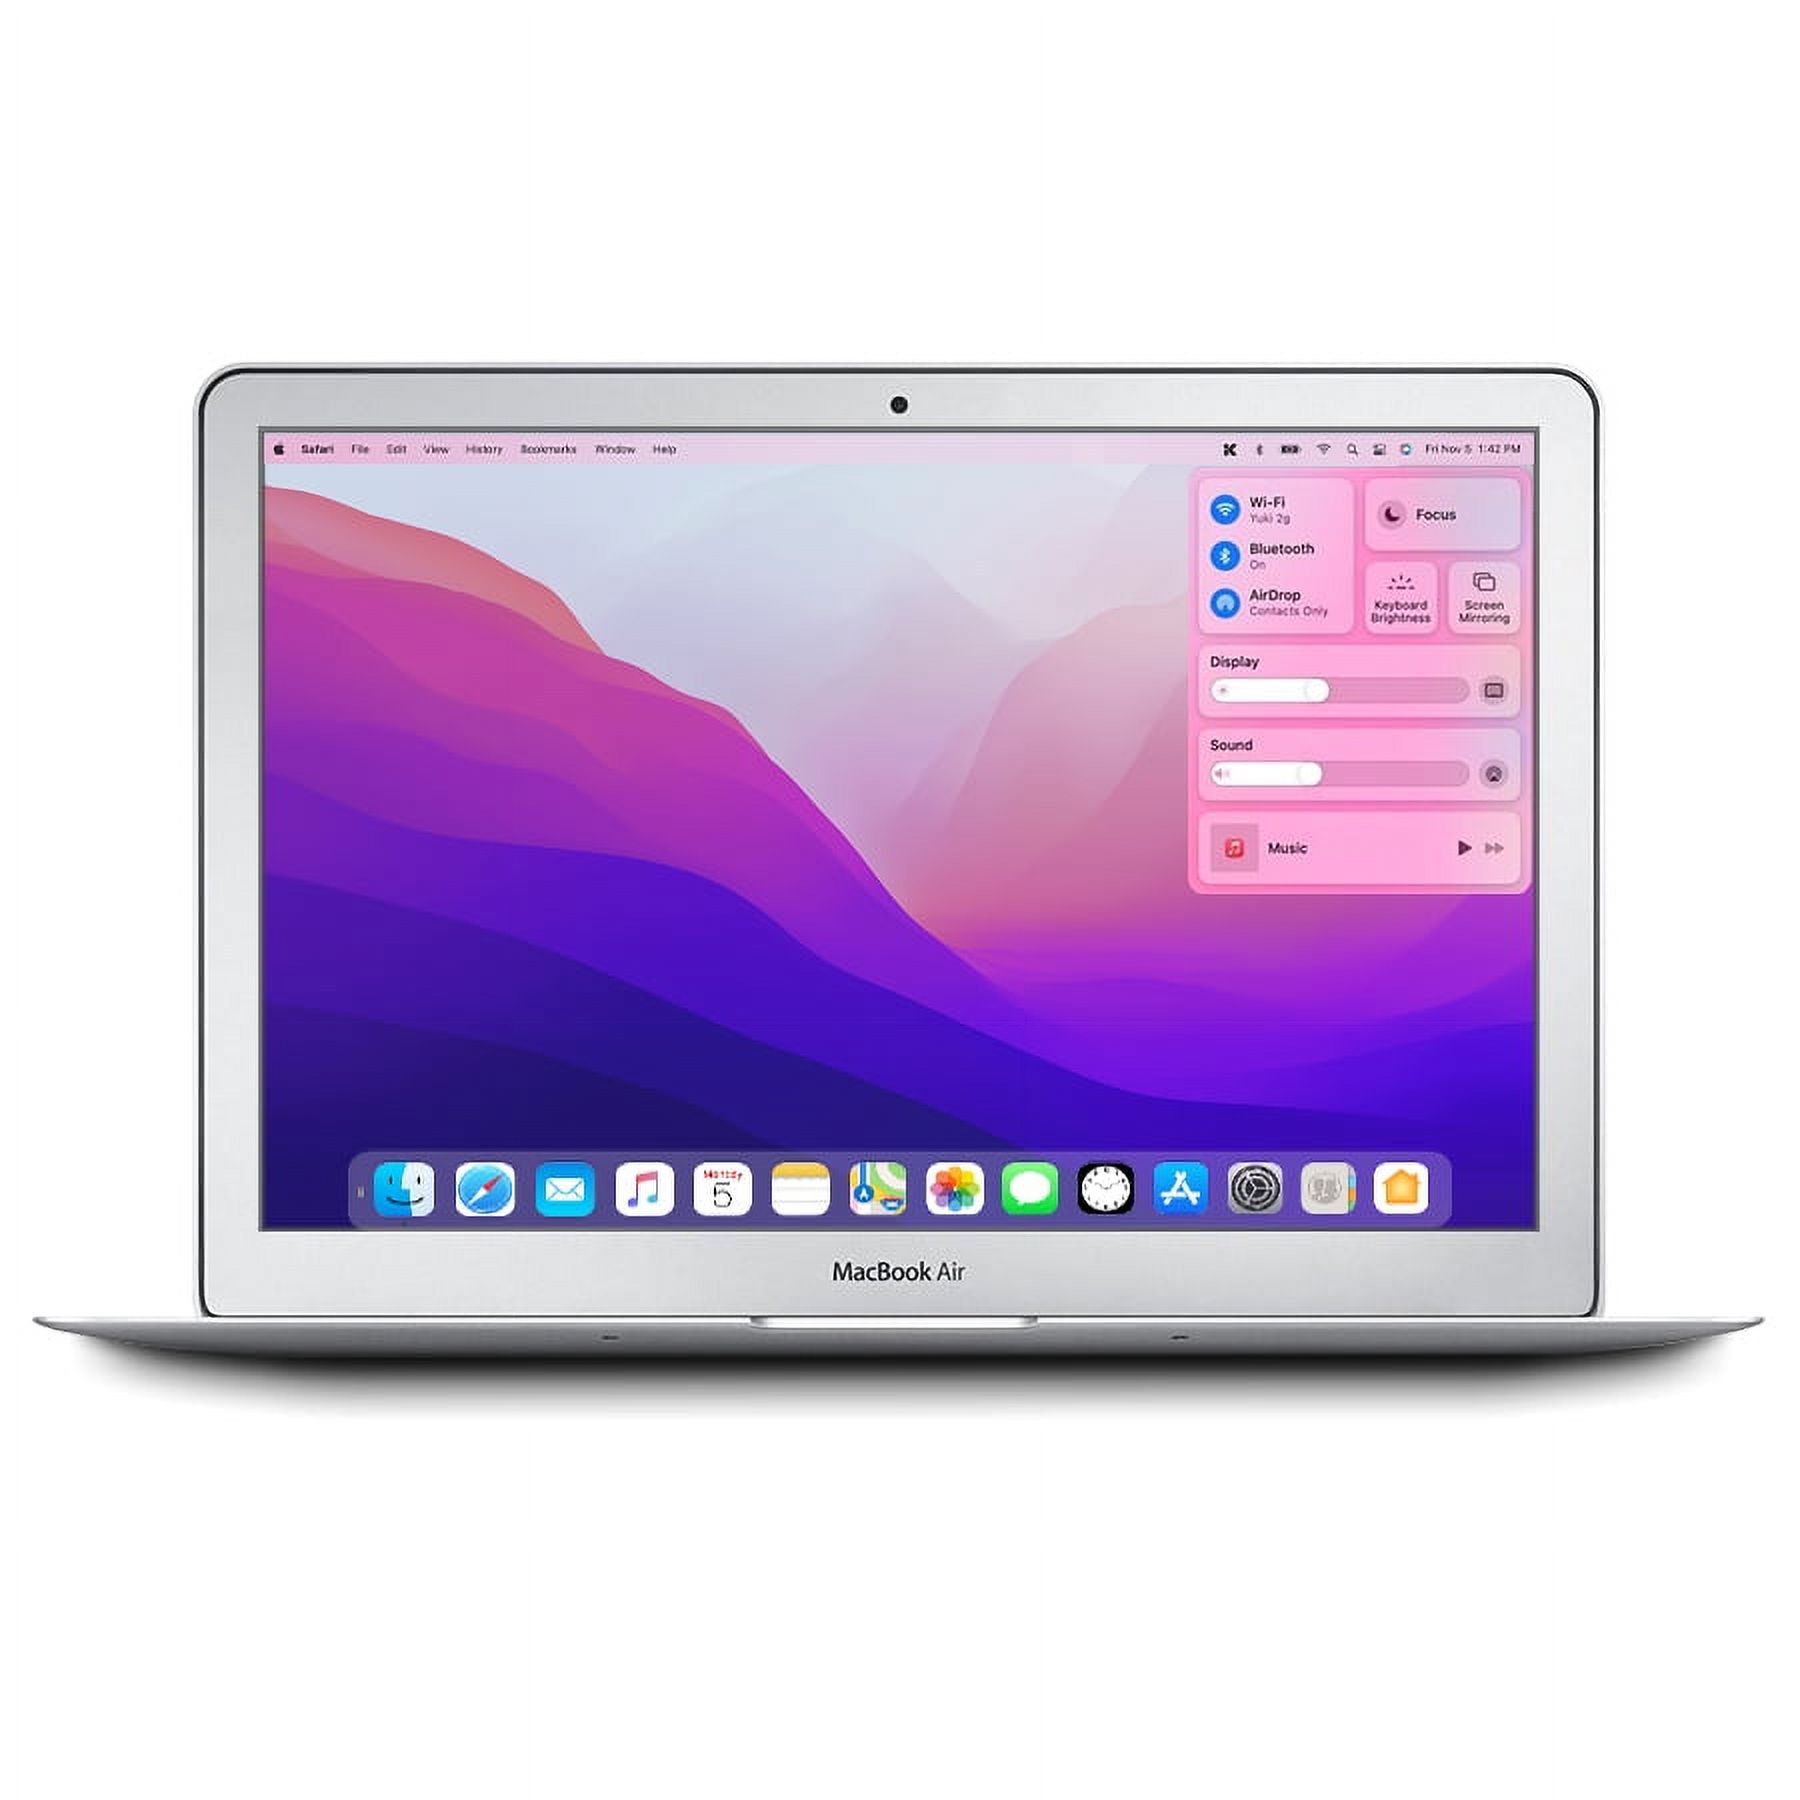 Restored Apple MacBook Air, 13.3" Laptop, Intel Core i5, 8GB RAM, 256GB SSD, None, Mac OS X 10.10, Silver, MMGG2LL/A (Refurbished) - image 1 of 4